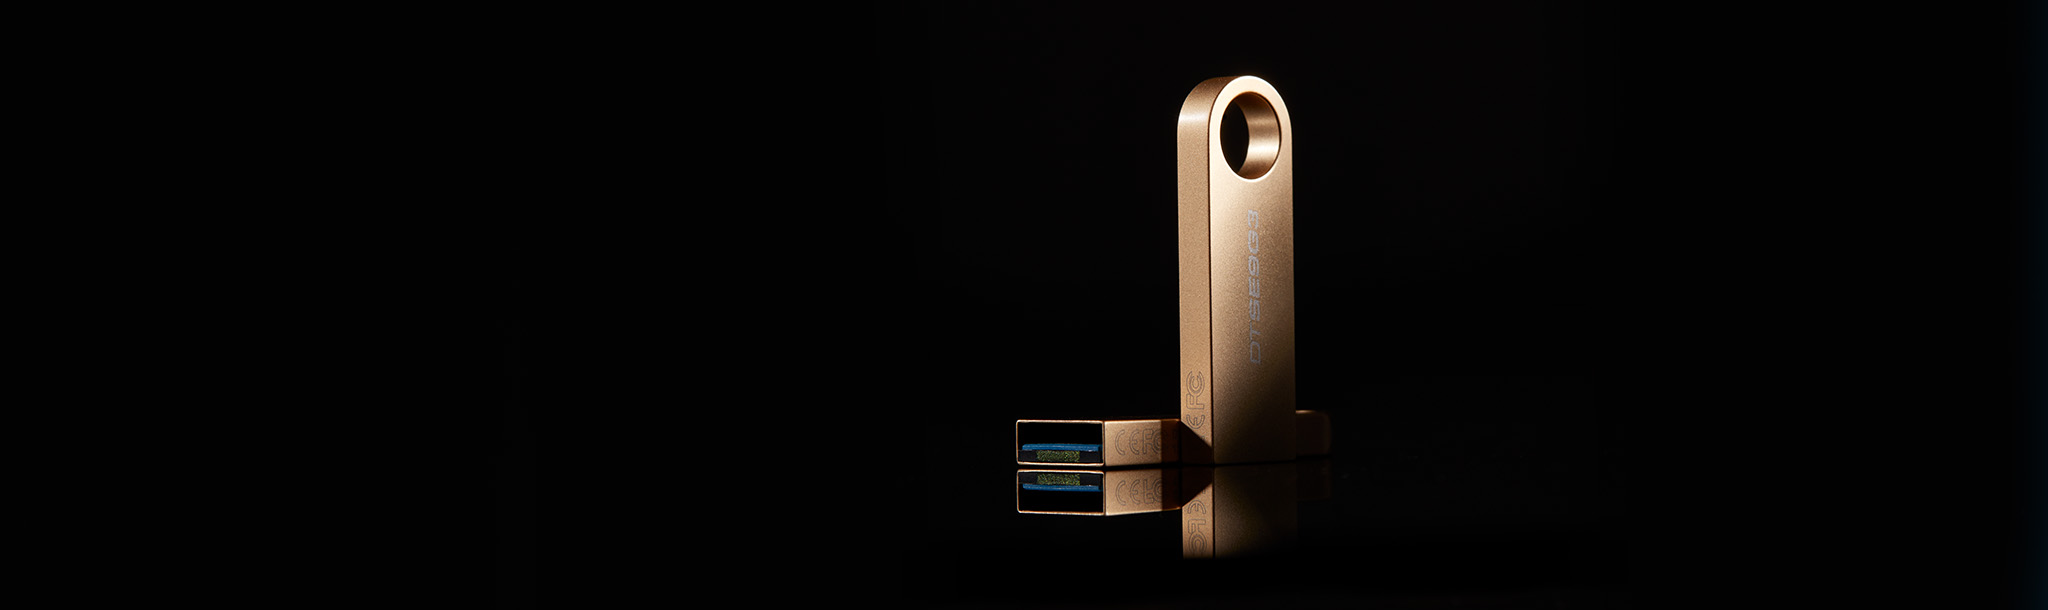 Detailed closeup of a gold DTSE9 G3 USB flash drive